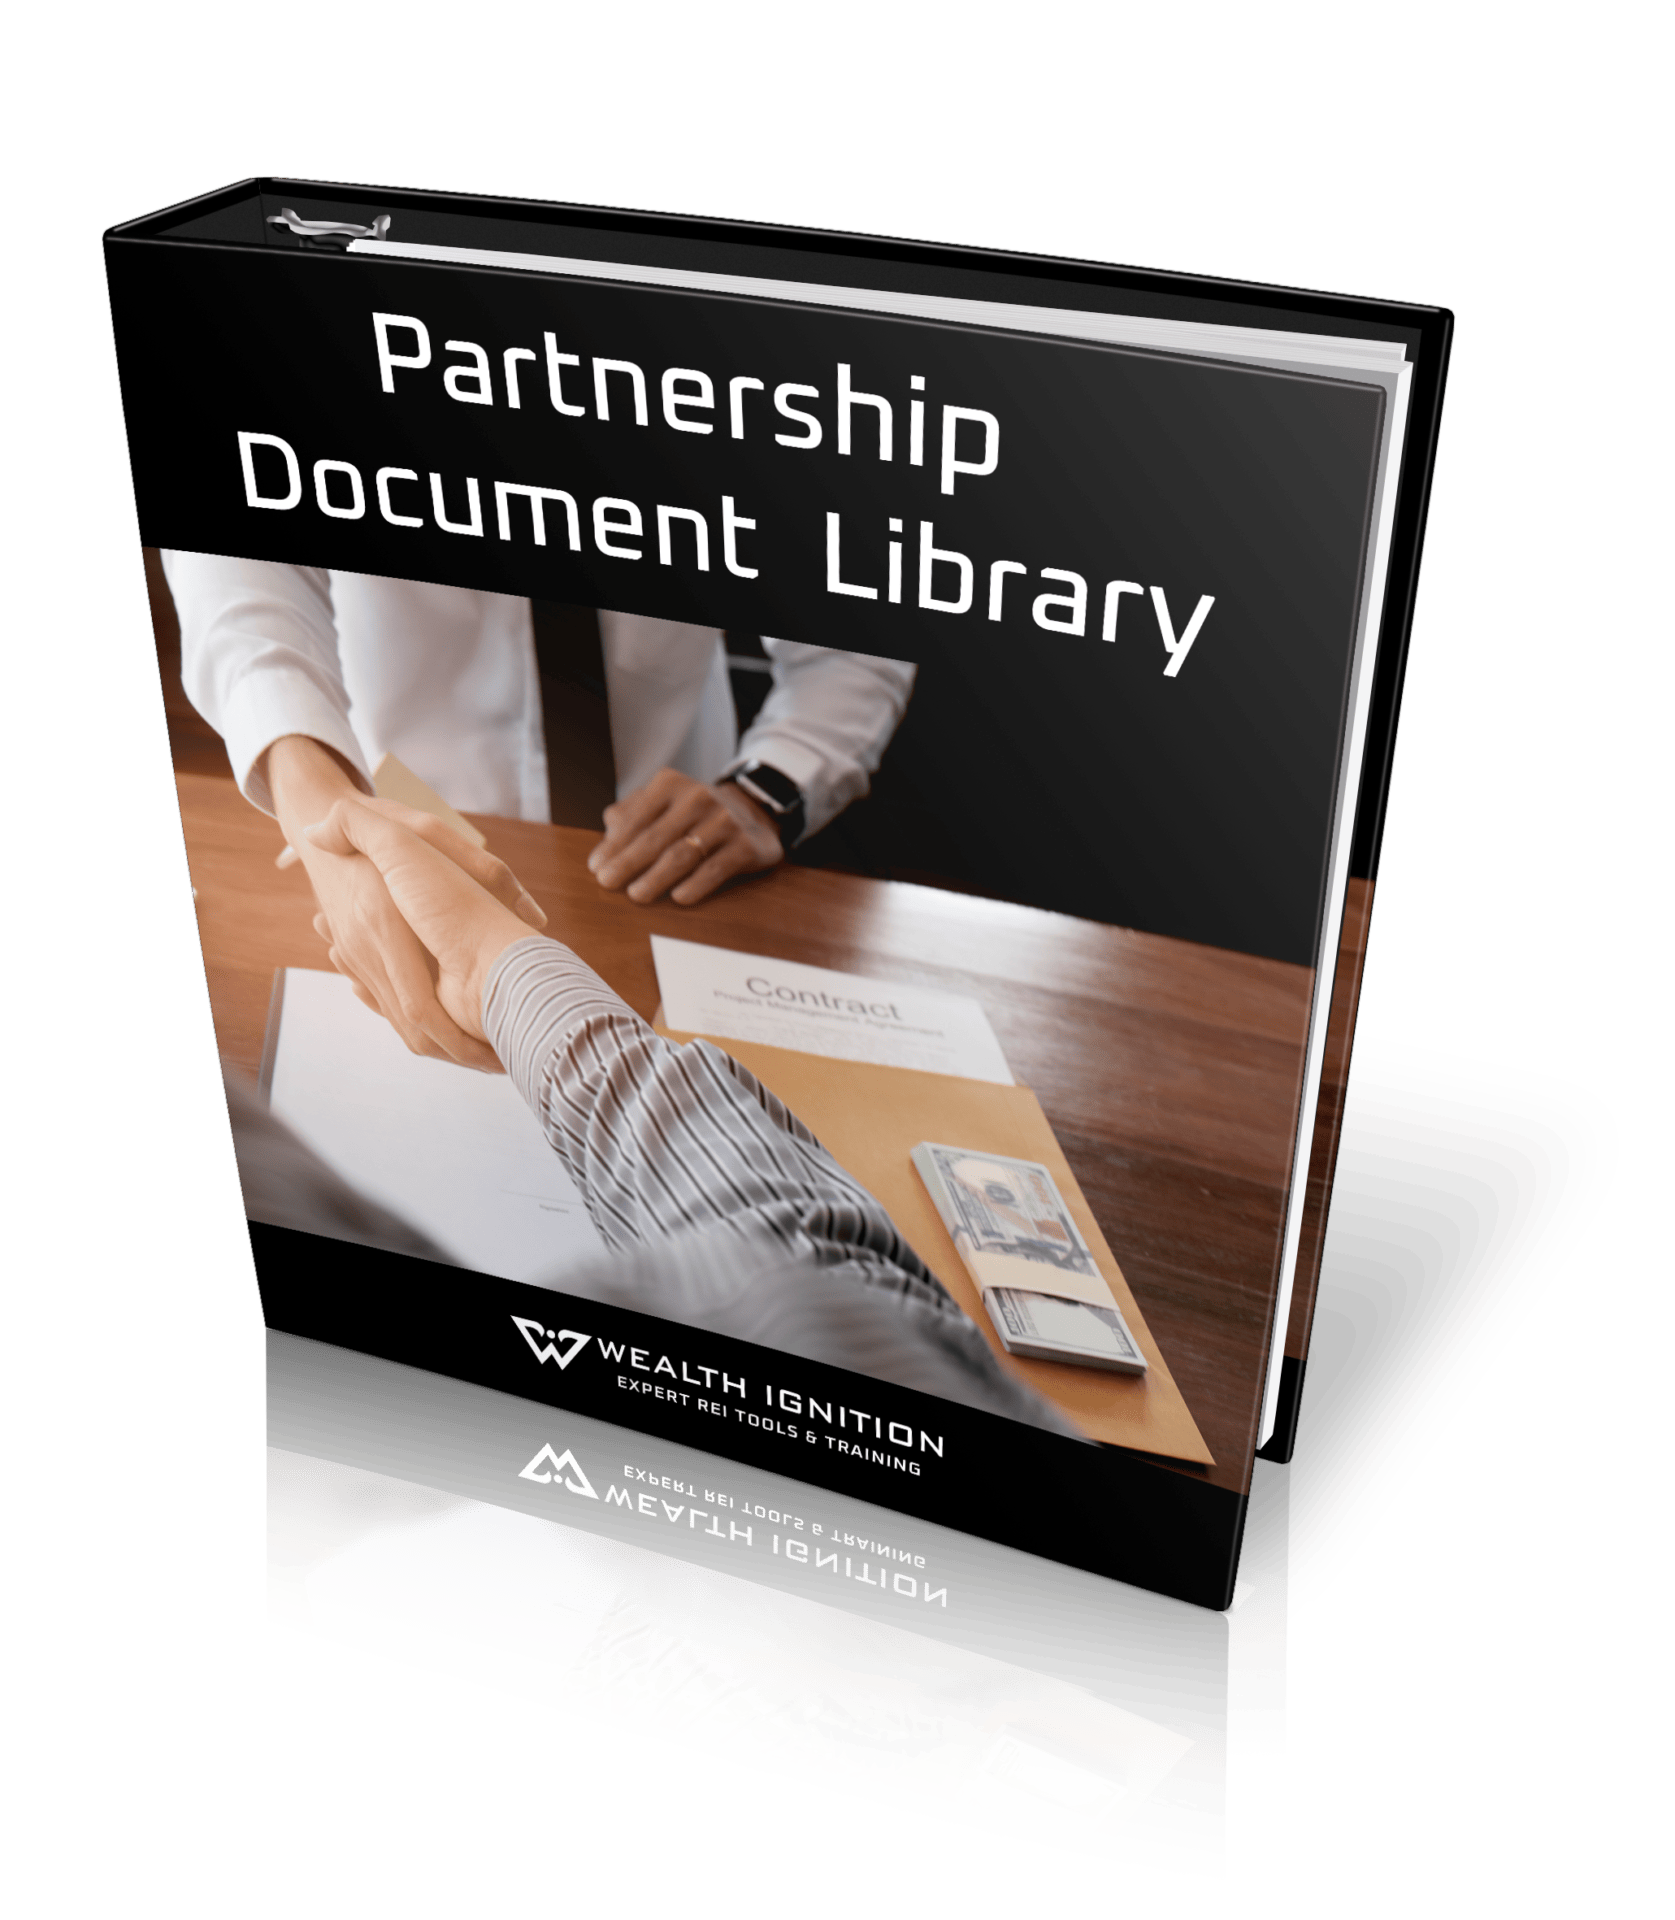 Partnership Document Library Binder Mockup